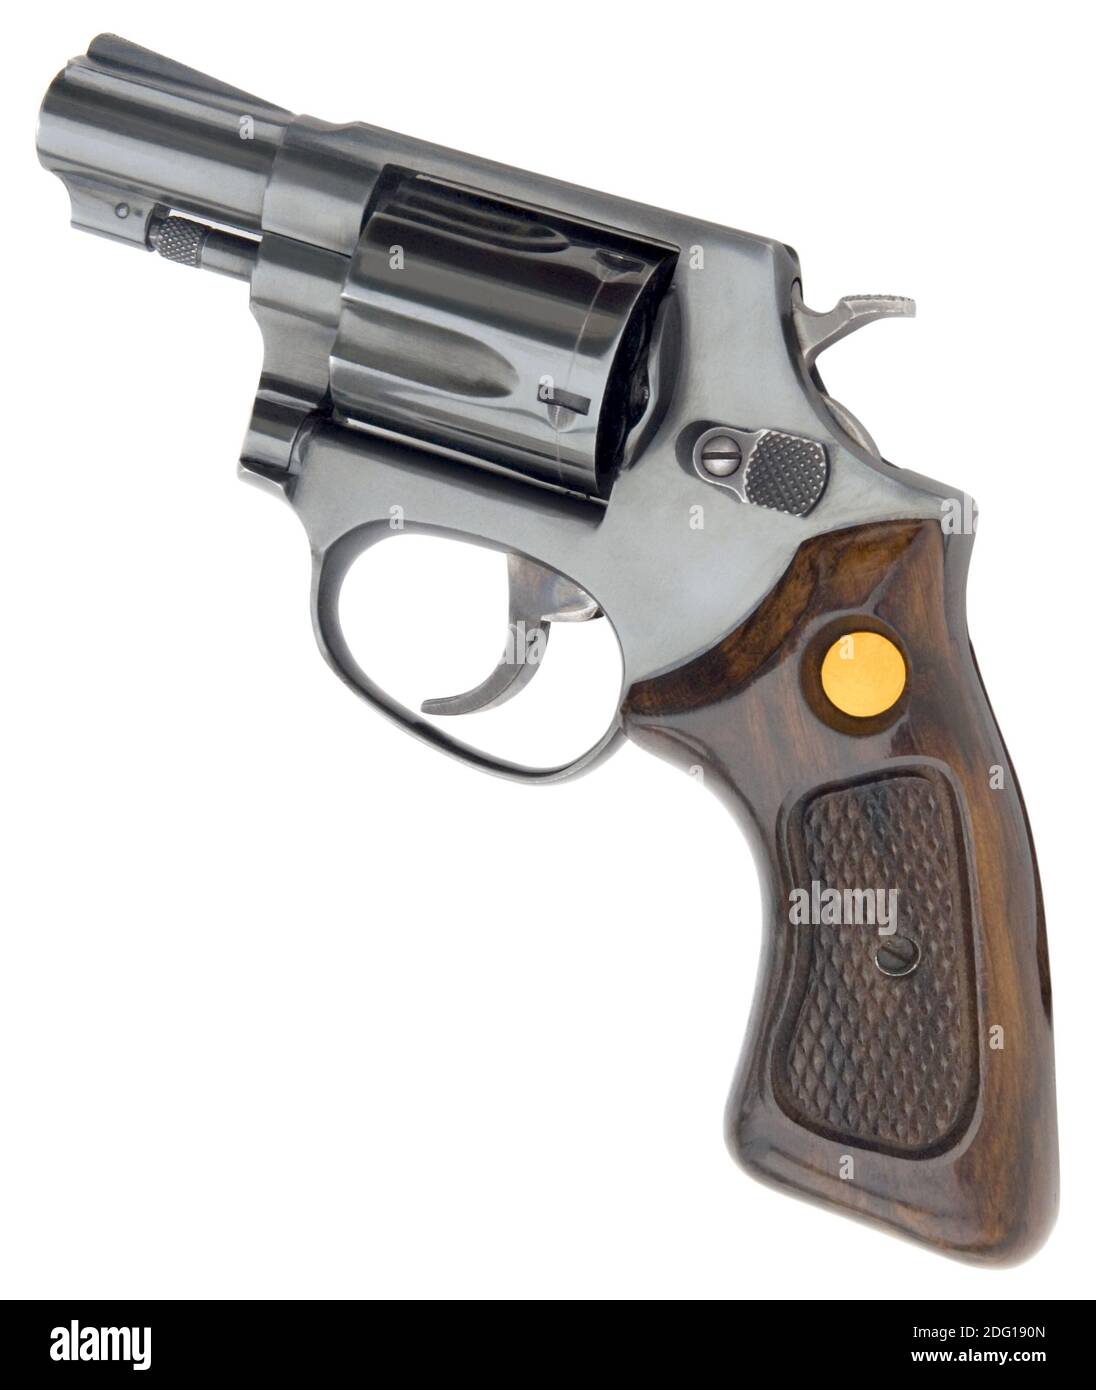 Pistol cutout Stock Photo